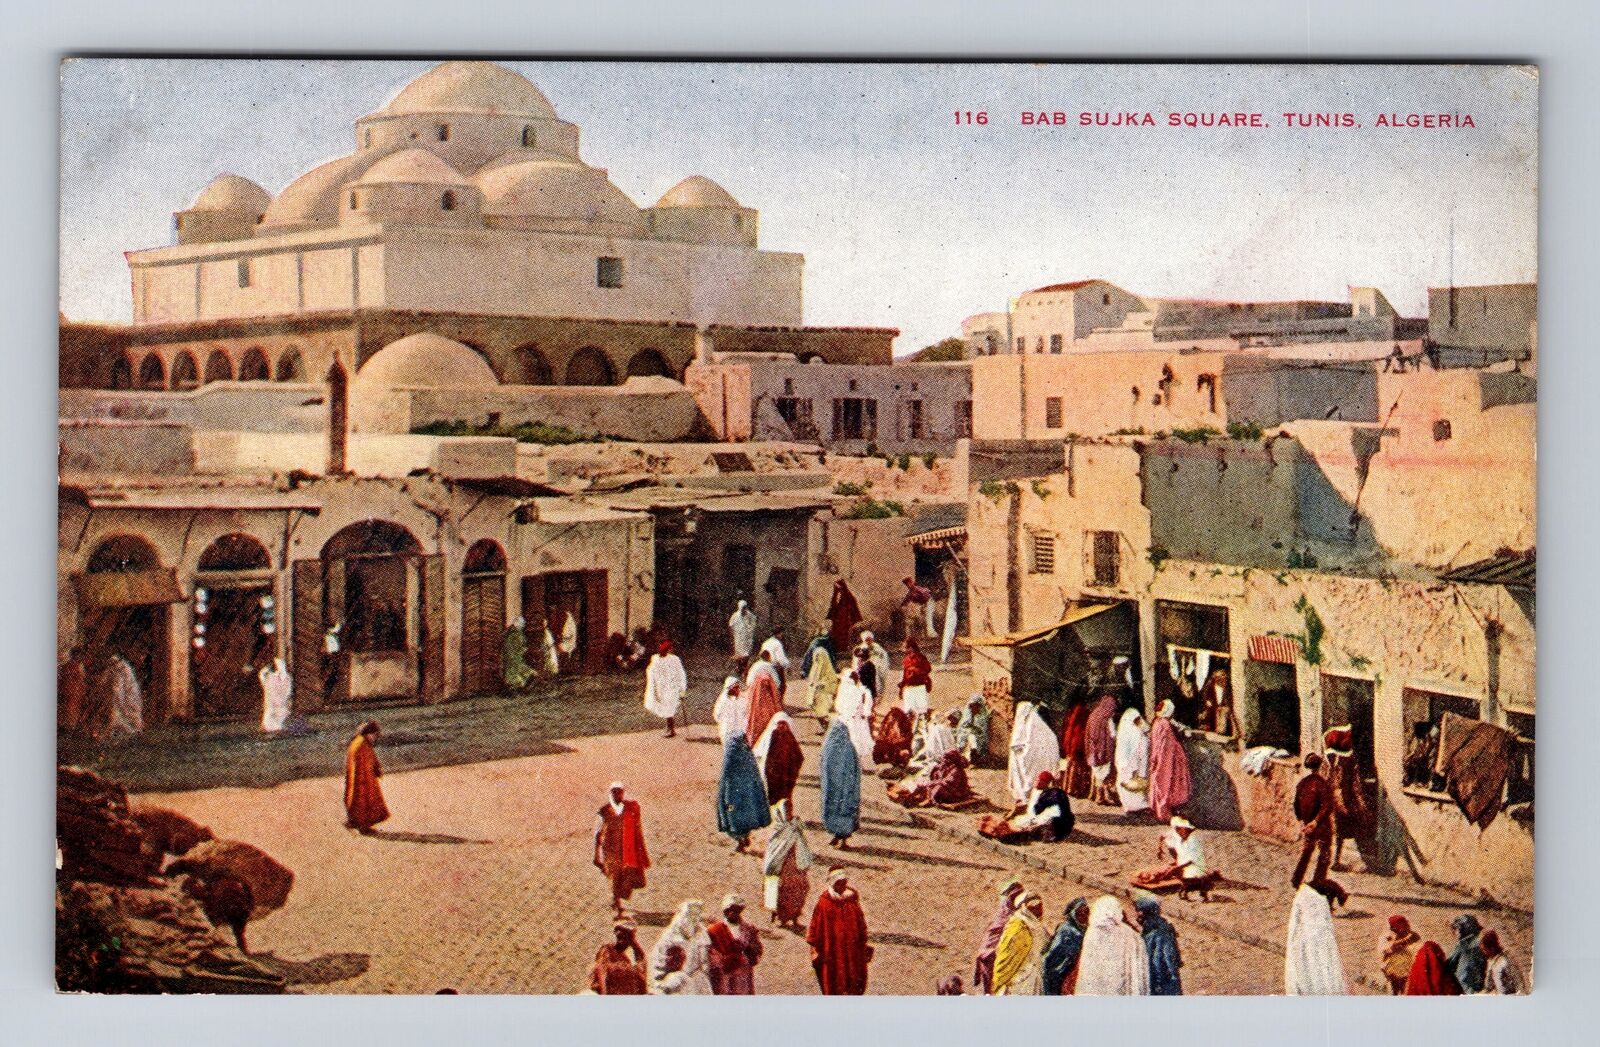 Tunis-Algeria, Bab Sujka Square, Advertisement, Antique, Vintage Postcard